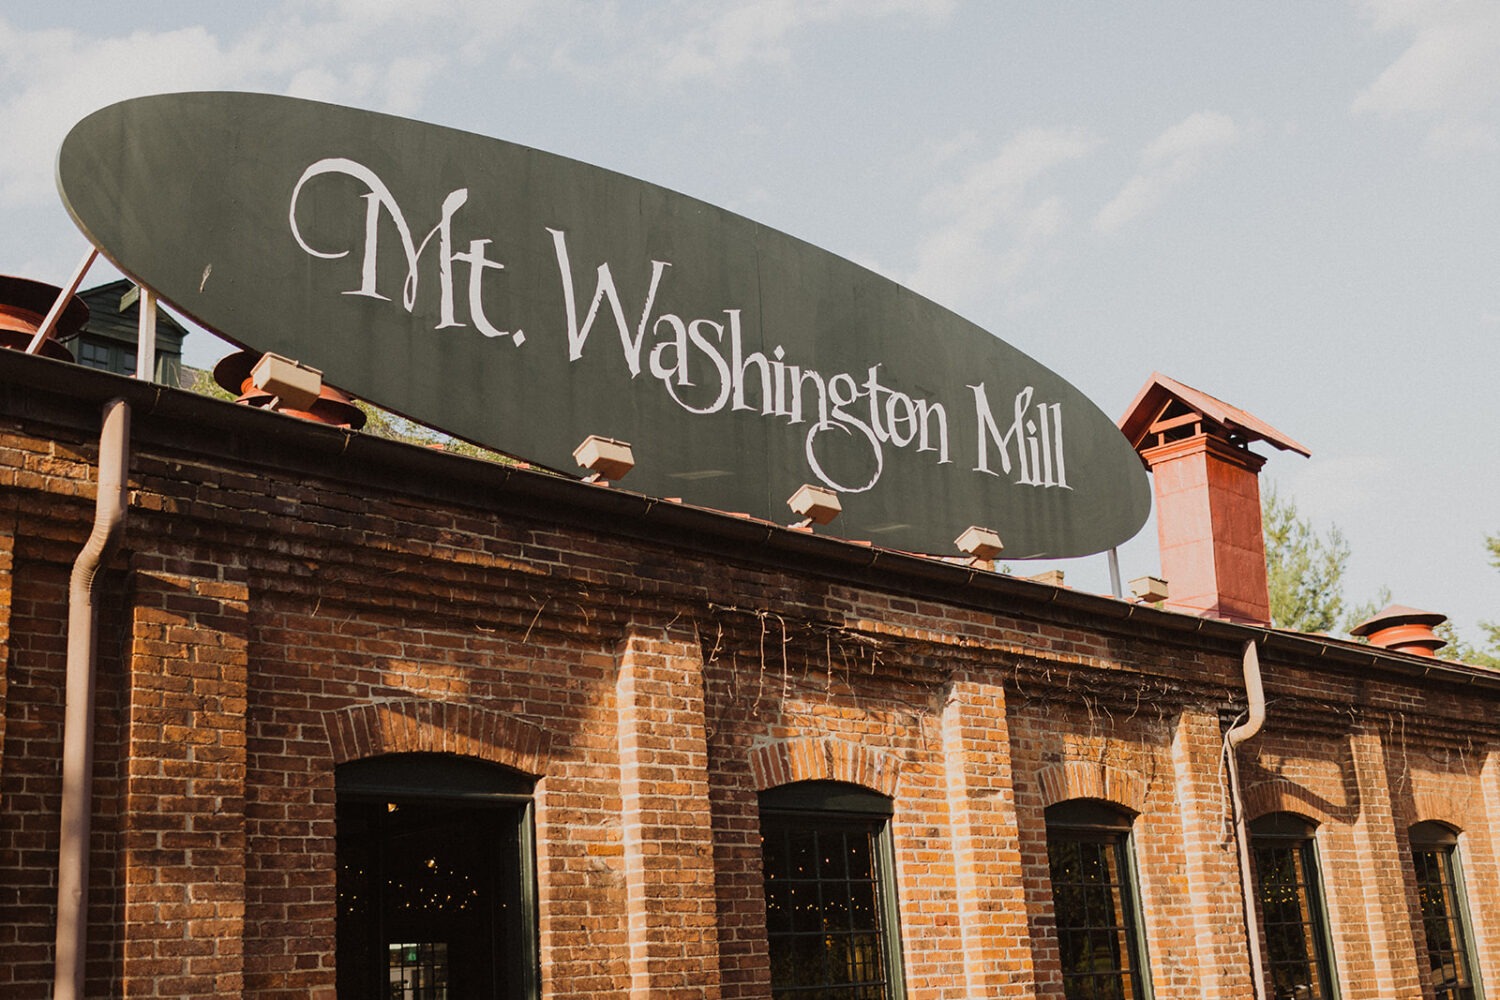 Mt. Washington Mill Dye House wedding venue sign